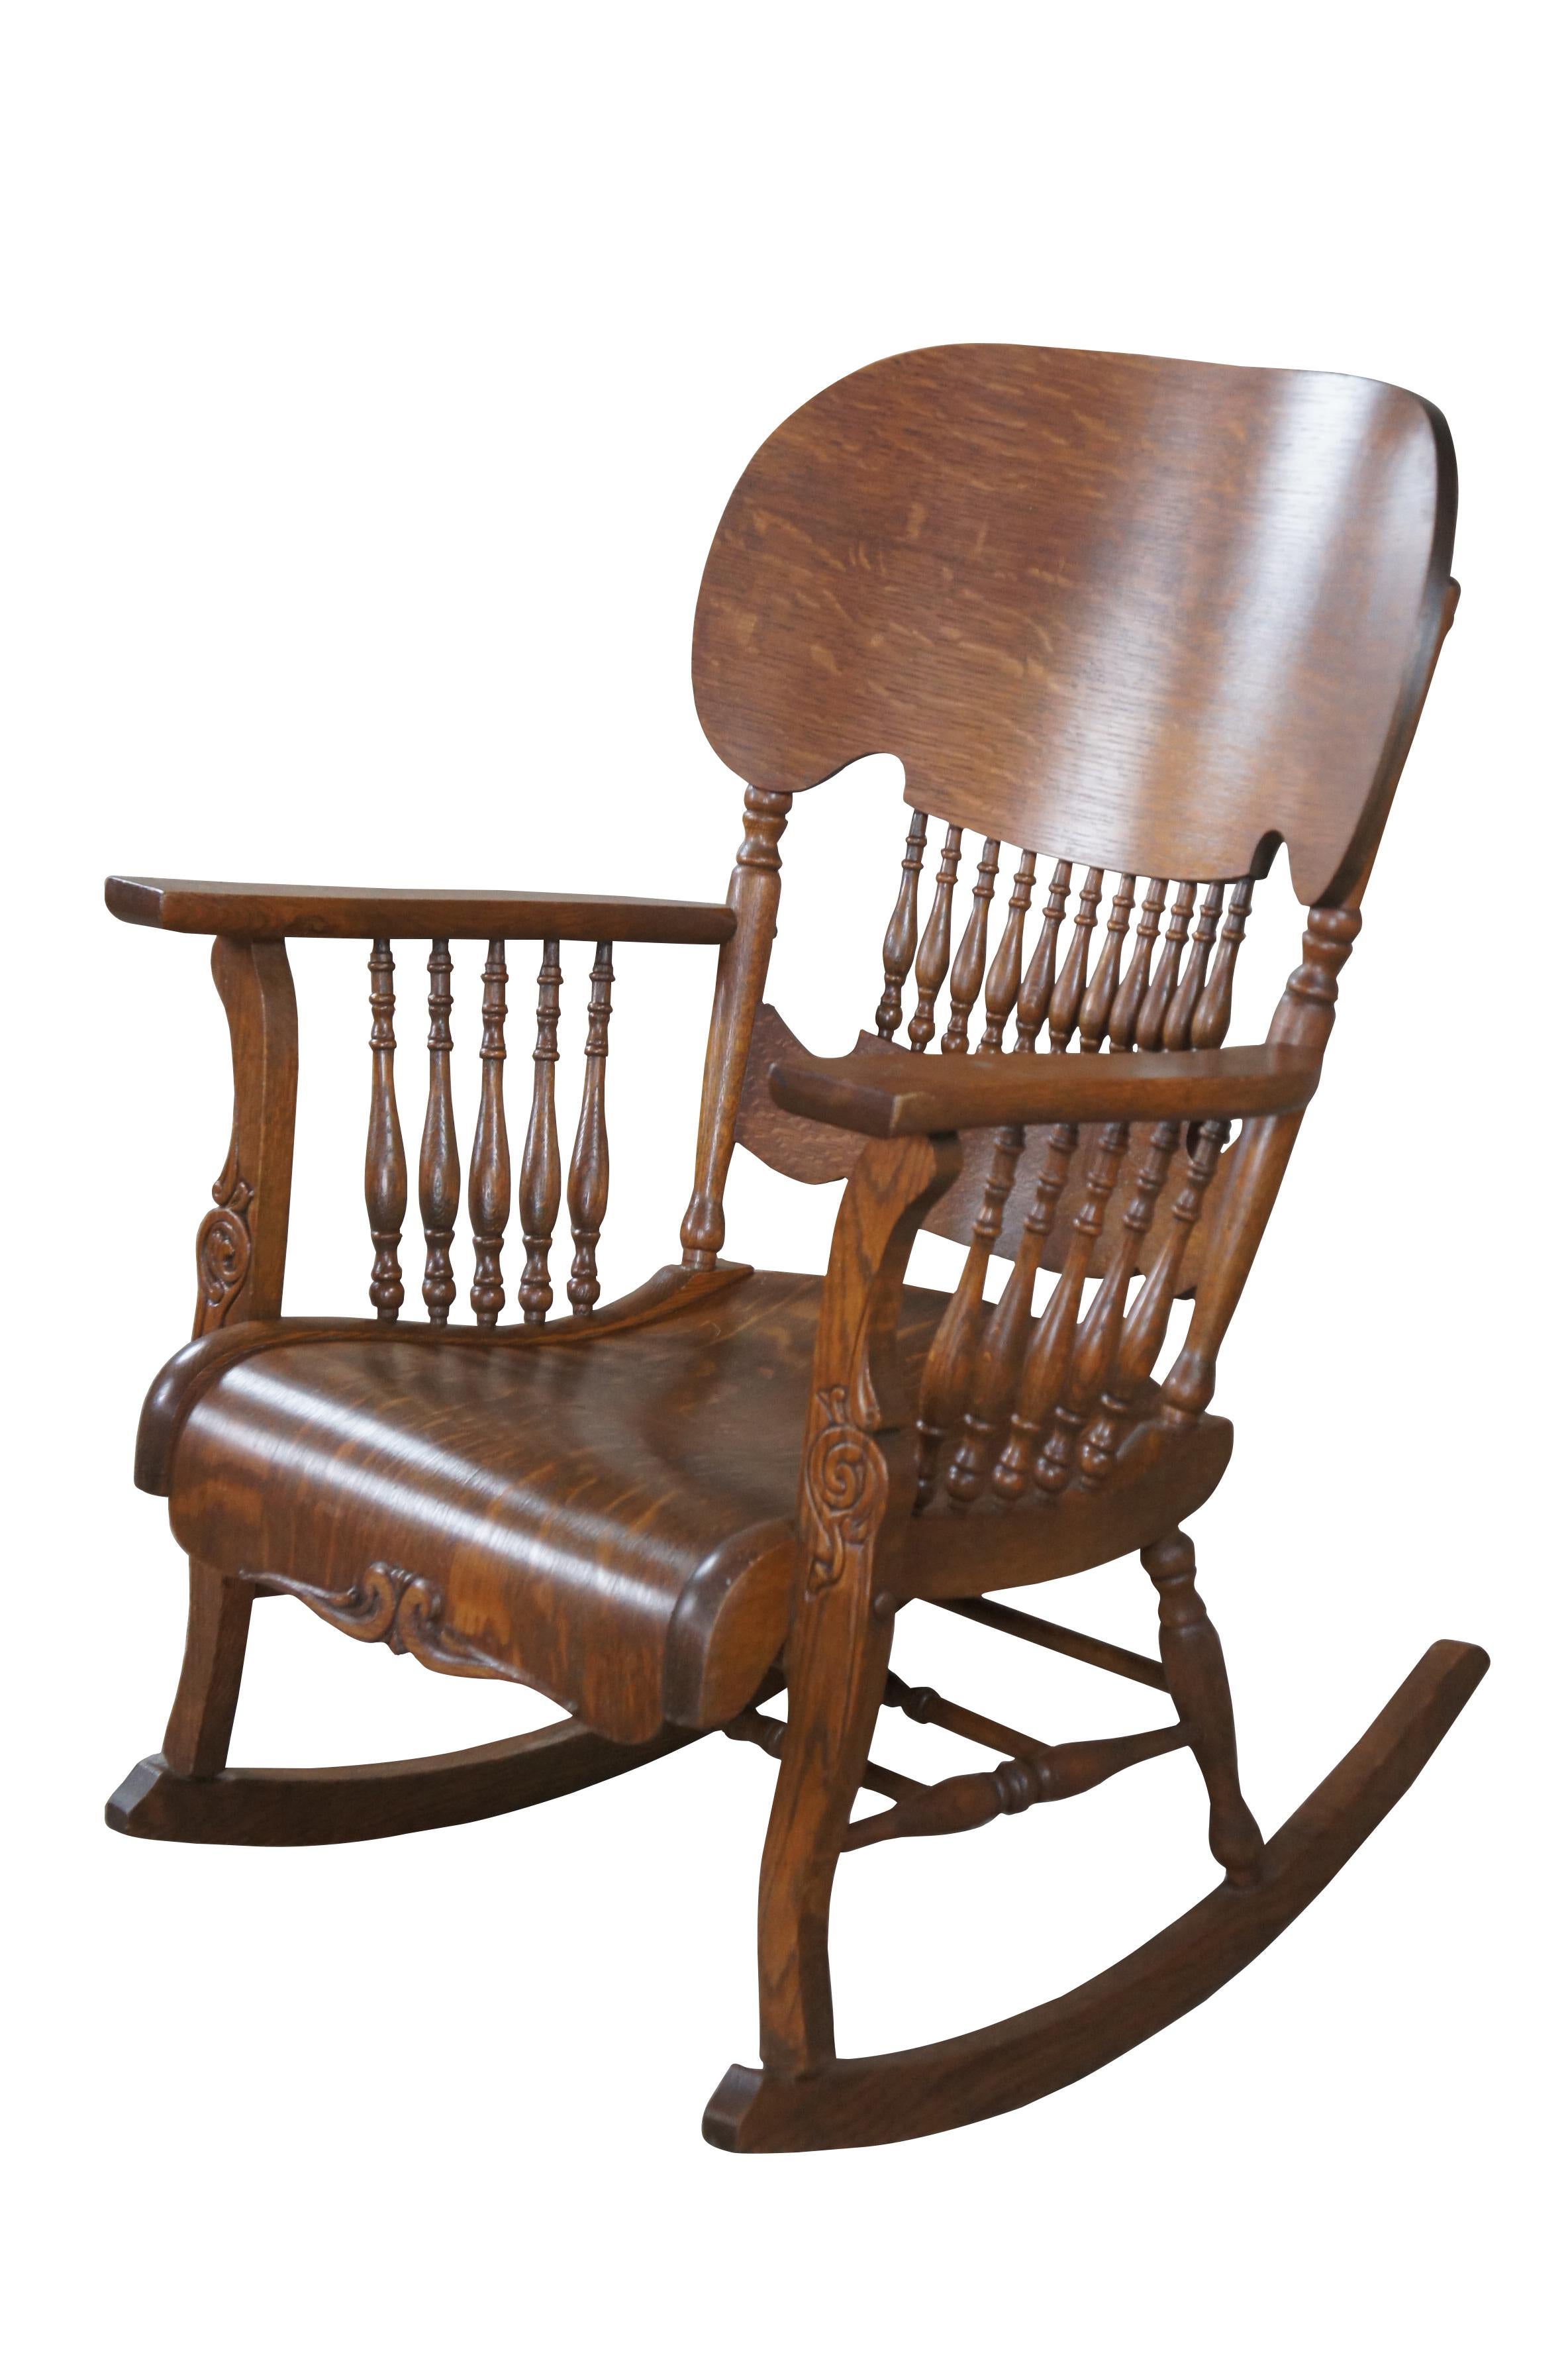 American Antique Arts & Crafts Mission Quartersawn Oak Bentwood Rocking Arm Chair Rocker For Sale